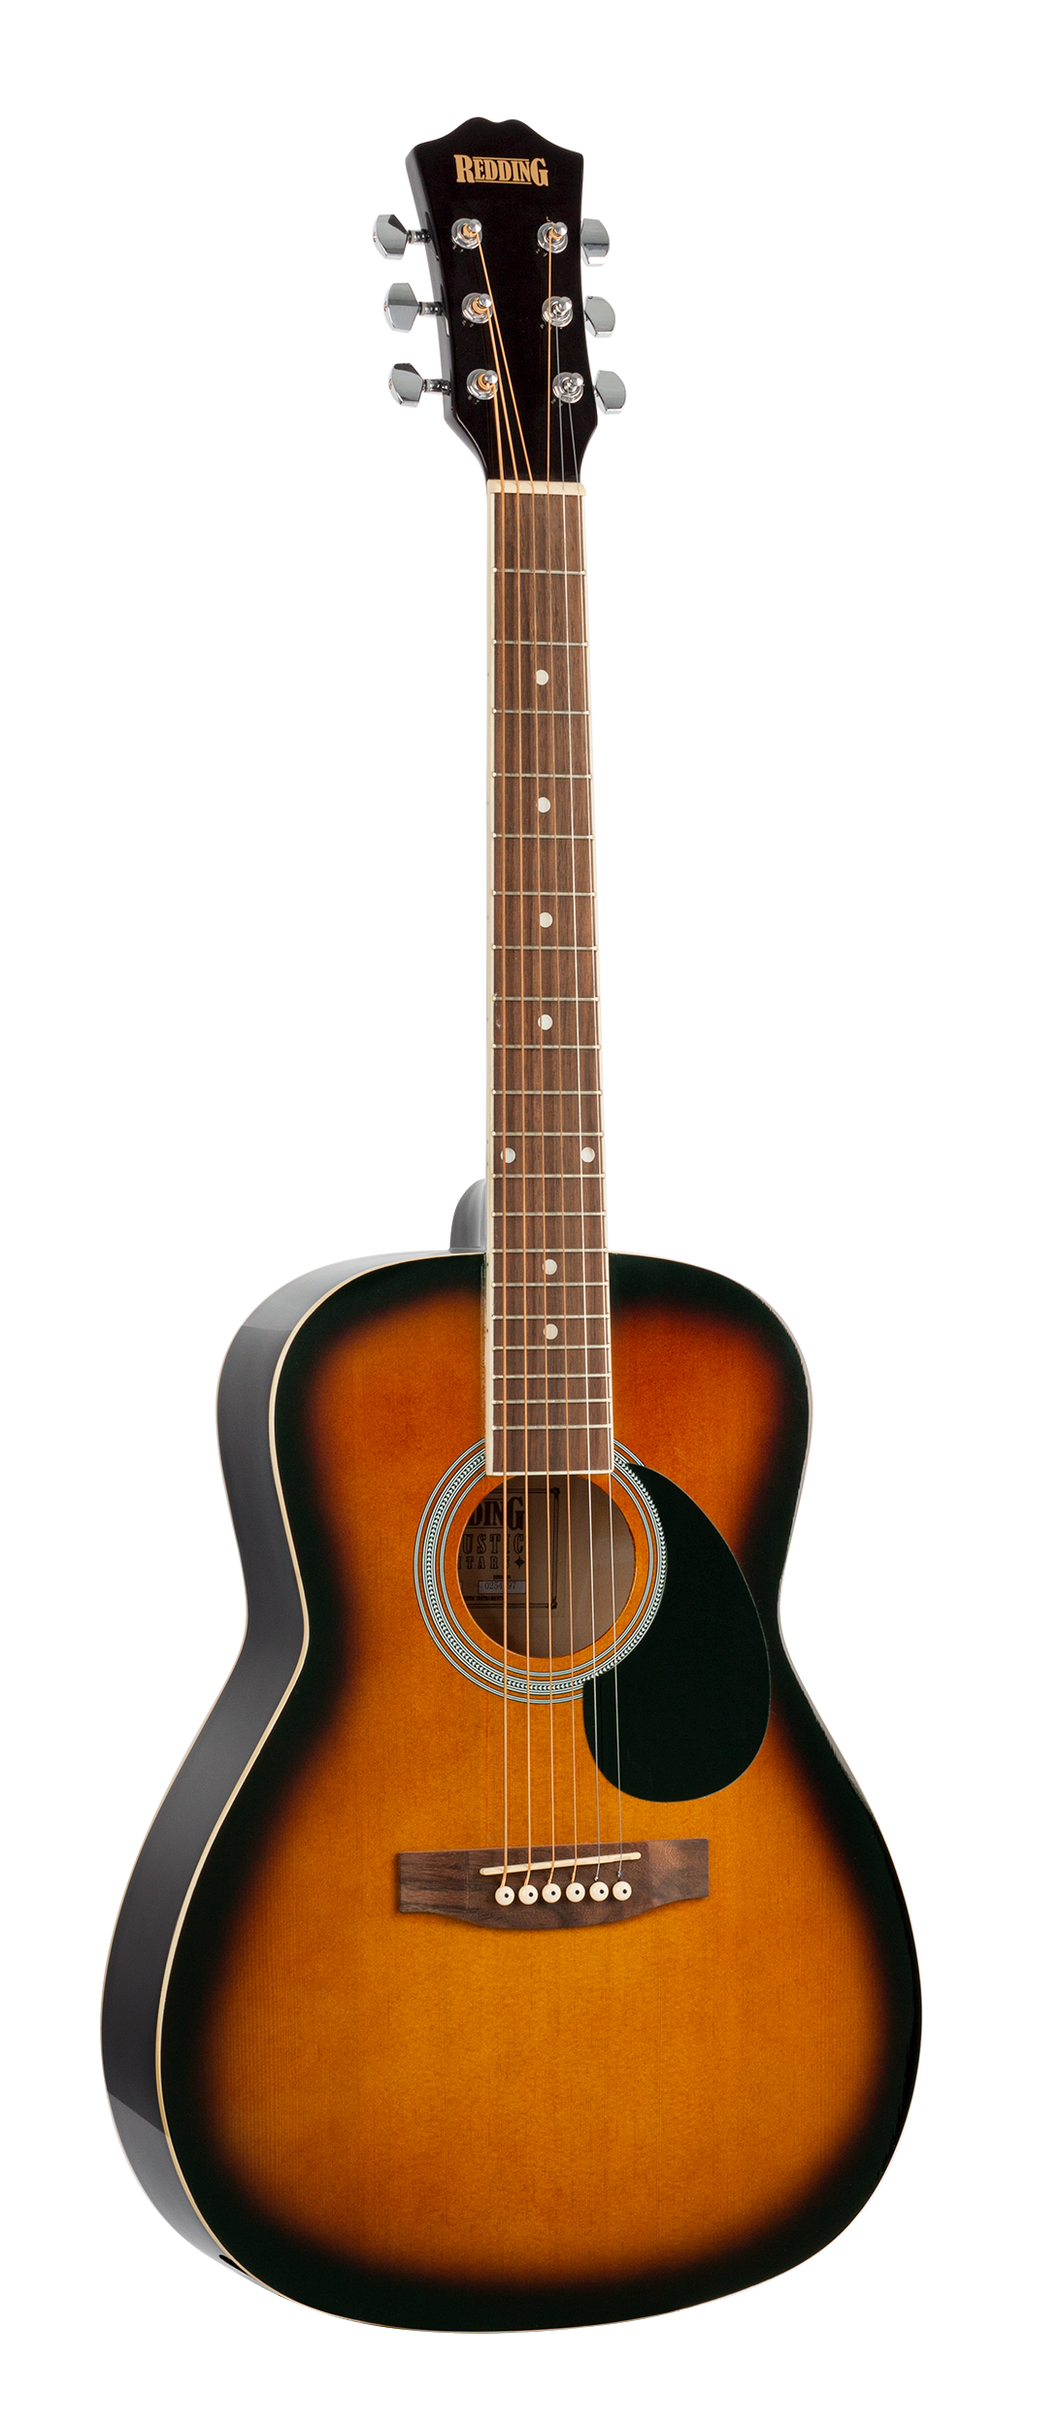 Redding TS 3/4 Acoustic Guitar